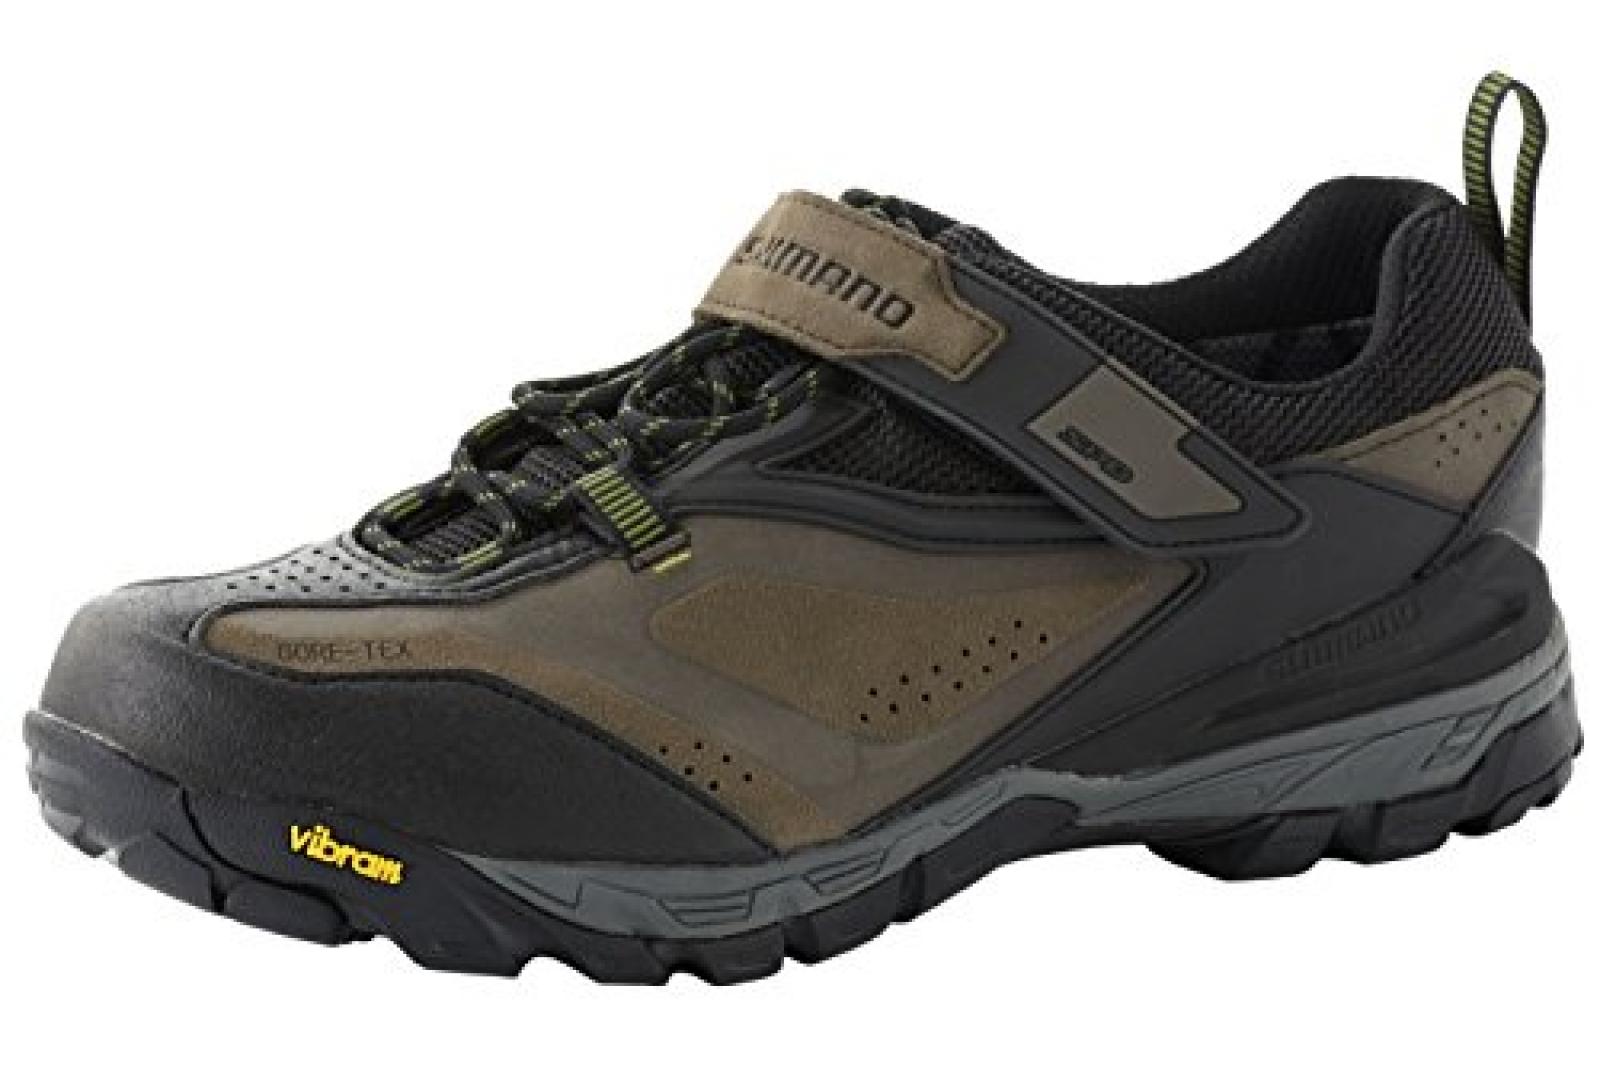 Shimano SH-MT71 Schuhe men black/brown Größe 43 2015 